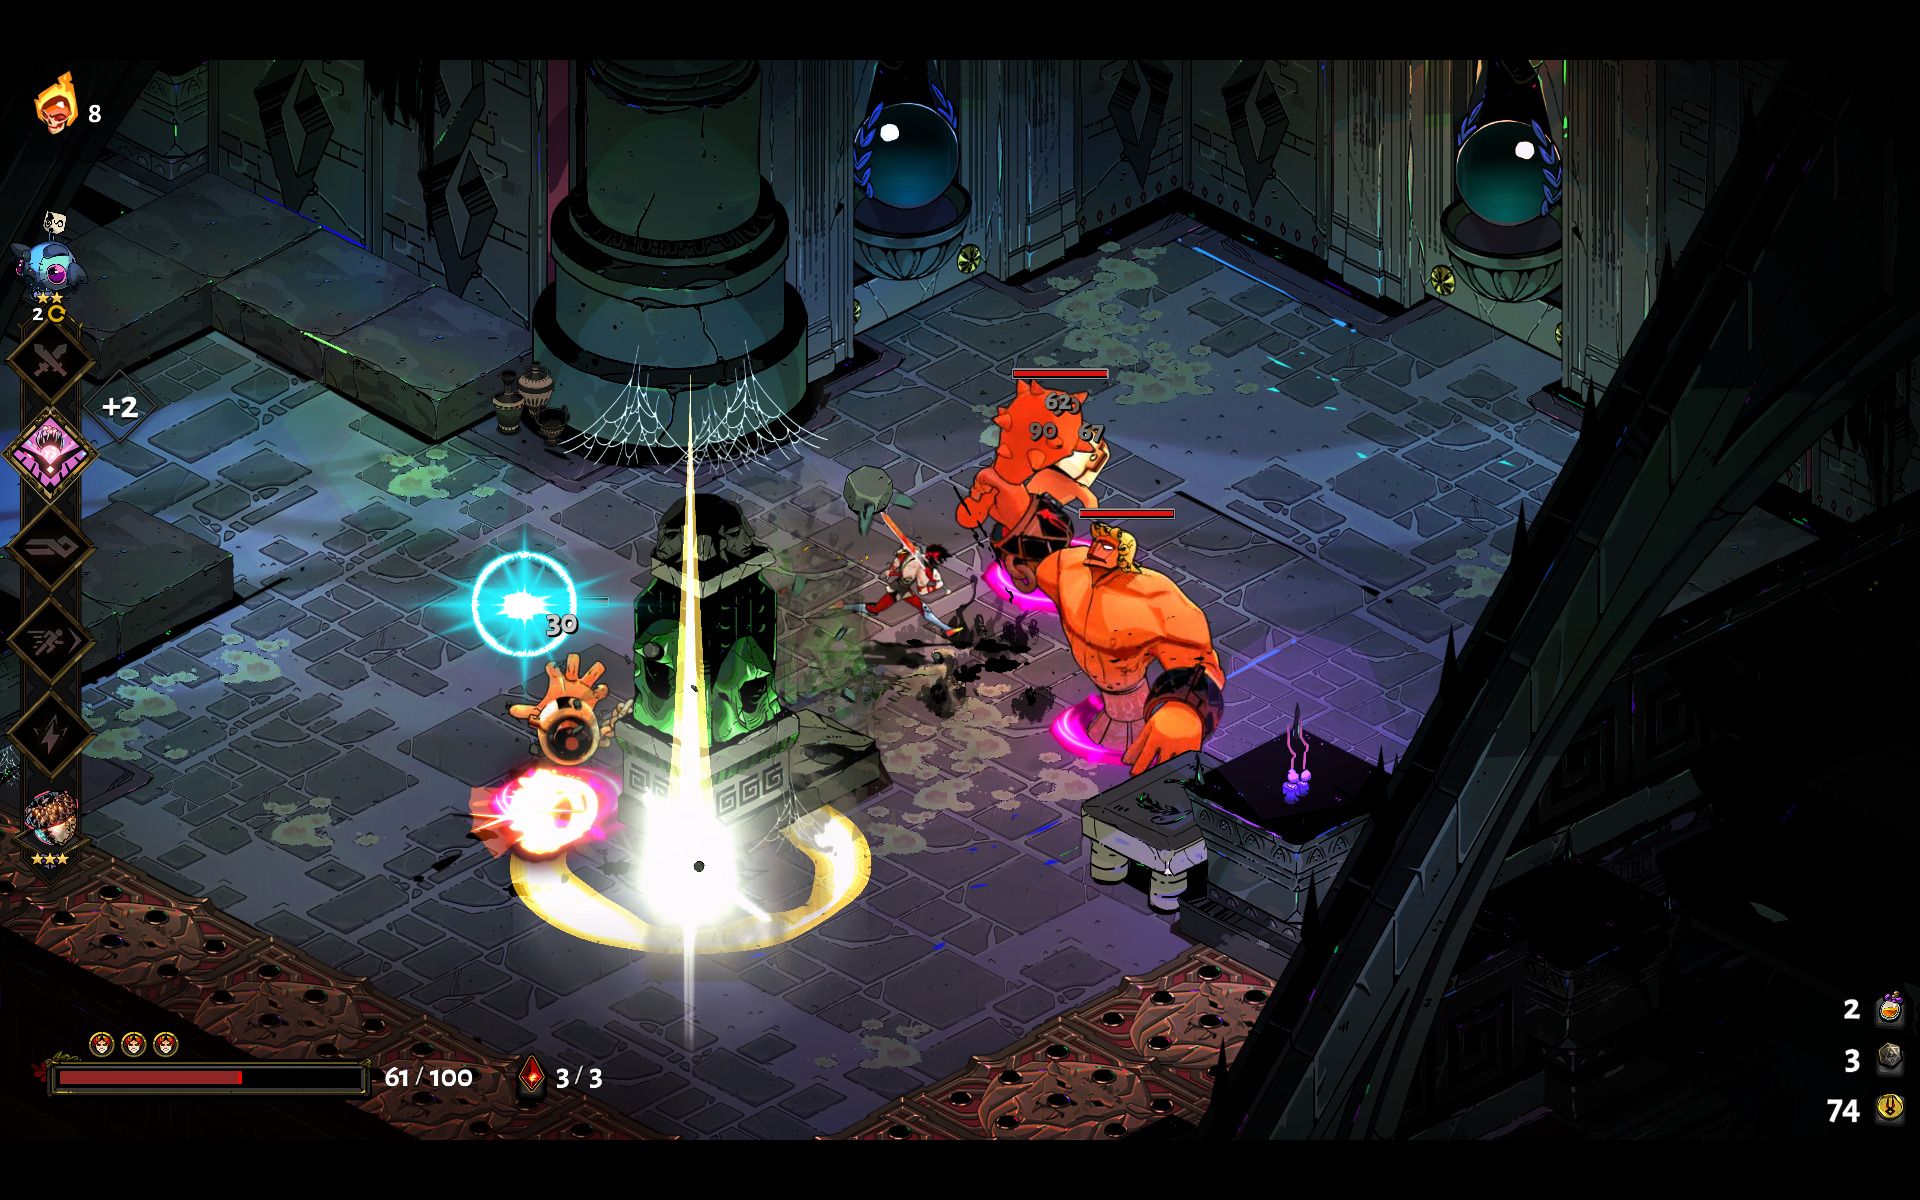 Screenshot from Hades: a sword-wielding hero runs through a dungeon avoiding enemies.